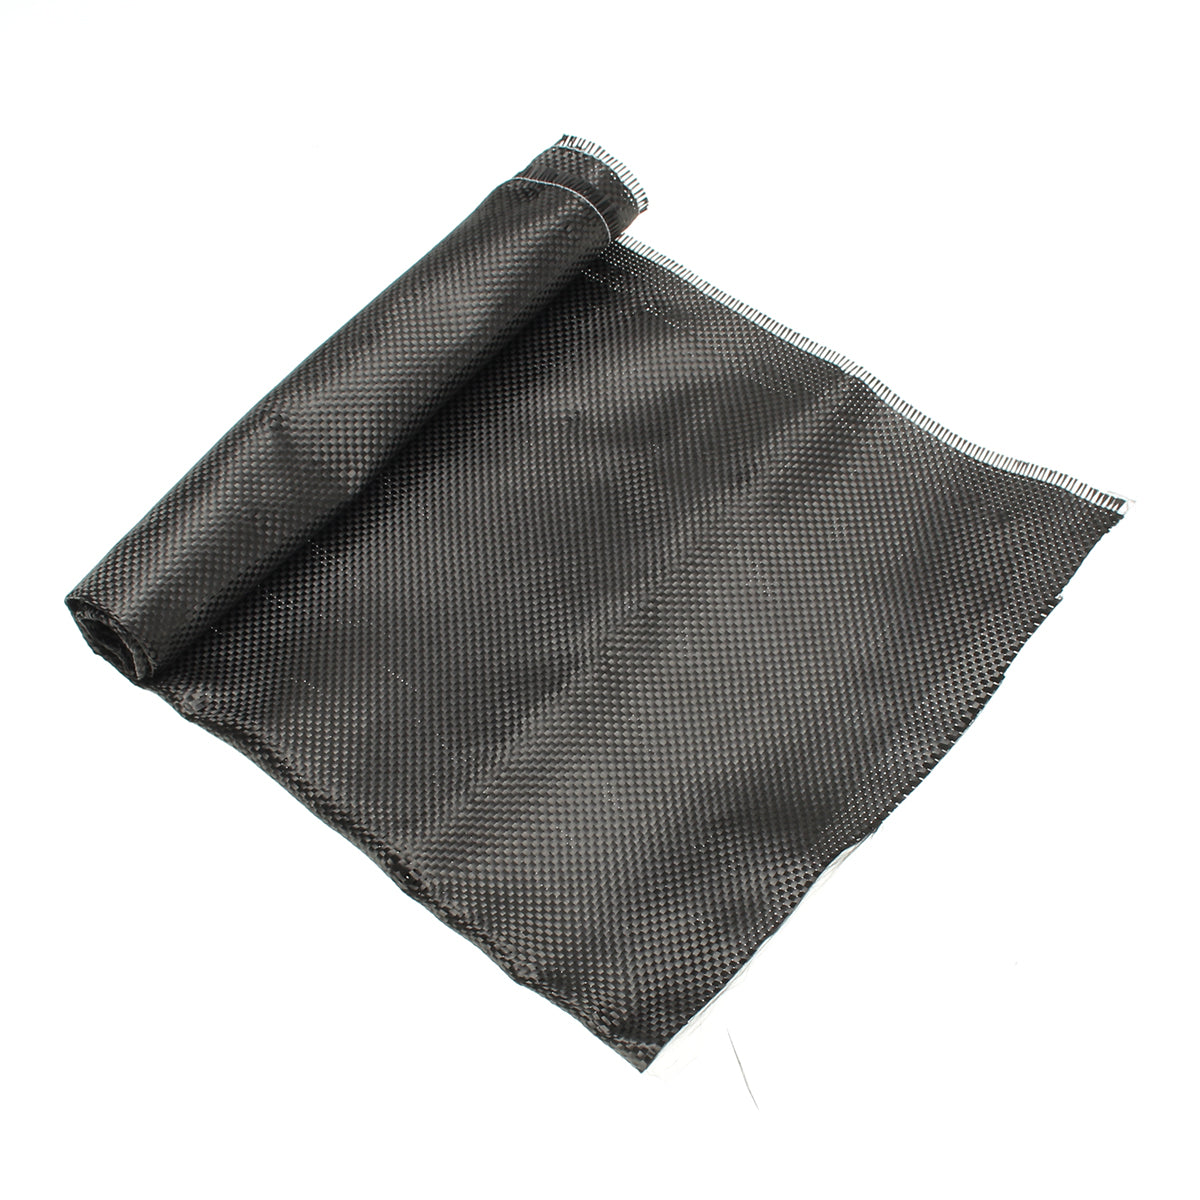 Dim Gray 3K 200gsm Carbon Fiber/Fibre Cloth Black Cloth Fabric Twill Weave